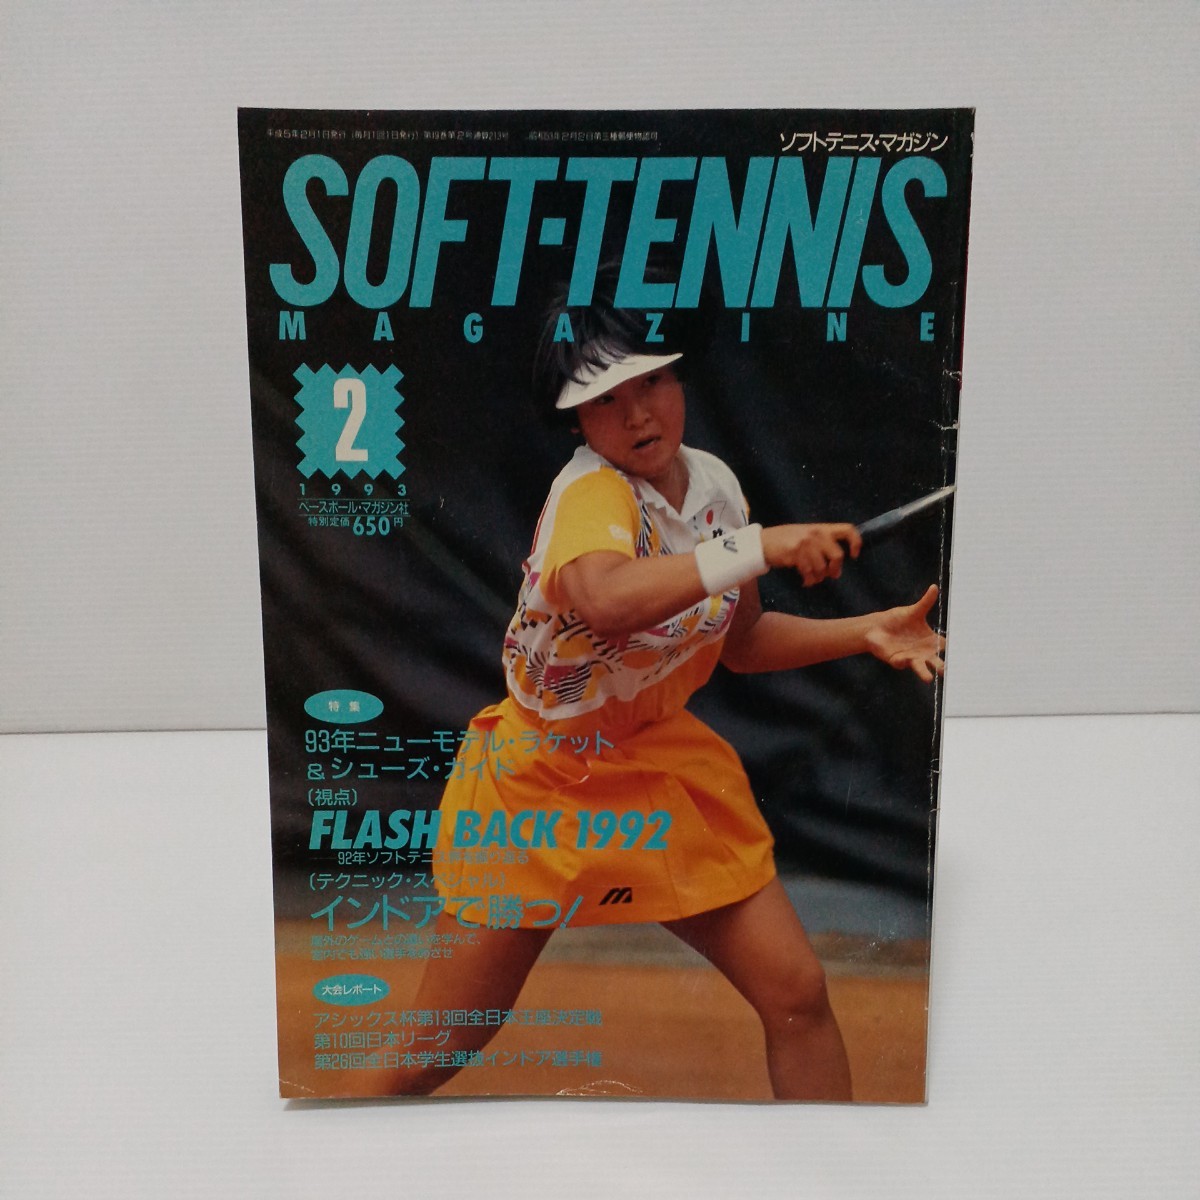  soft теннис * журнал 1993 год 2 месяц номер 